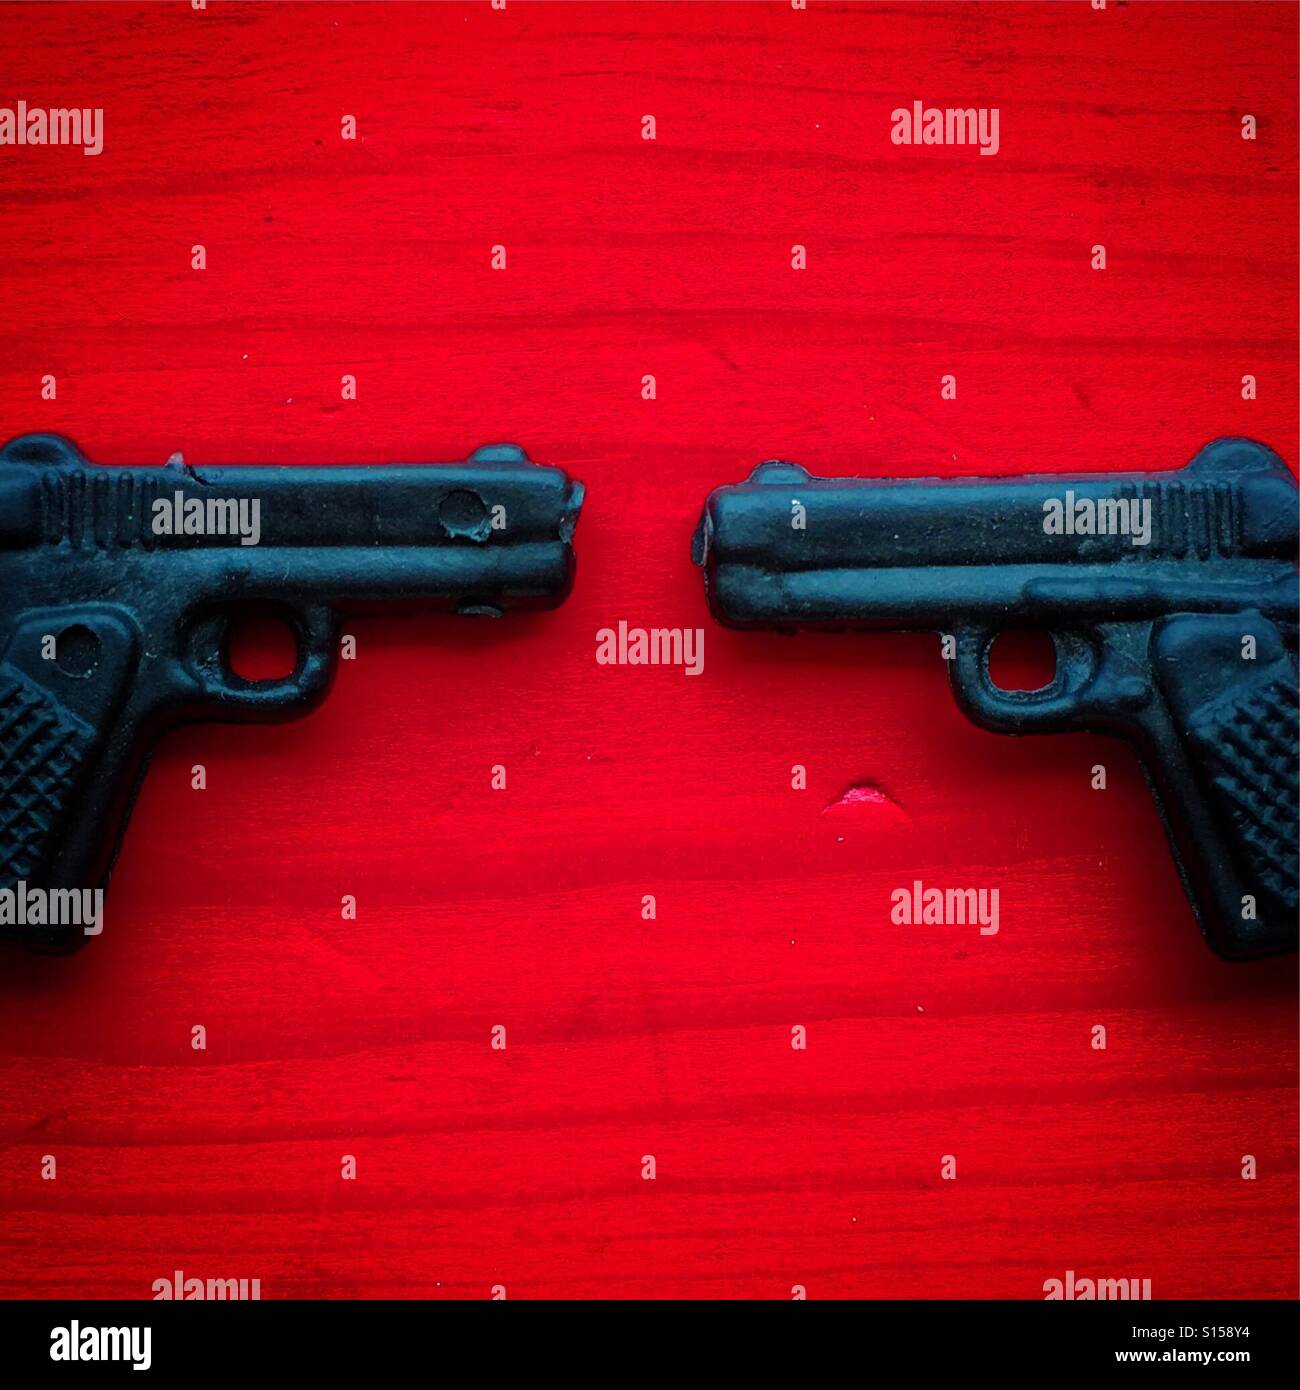 confrontation of 2 guns Stock Photo